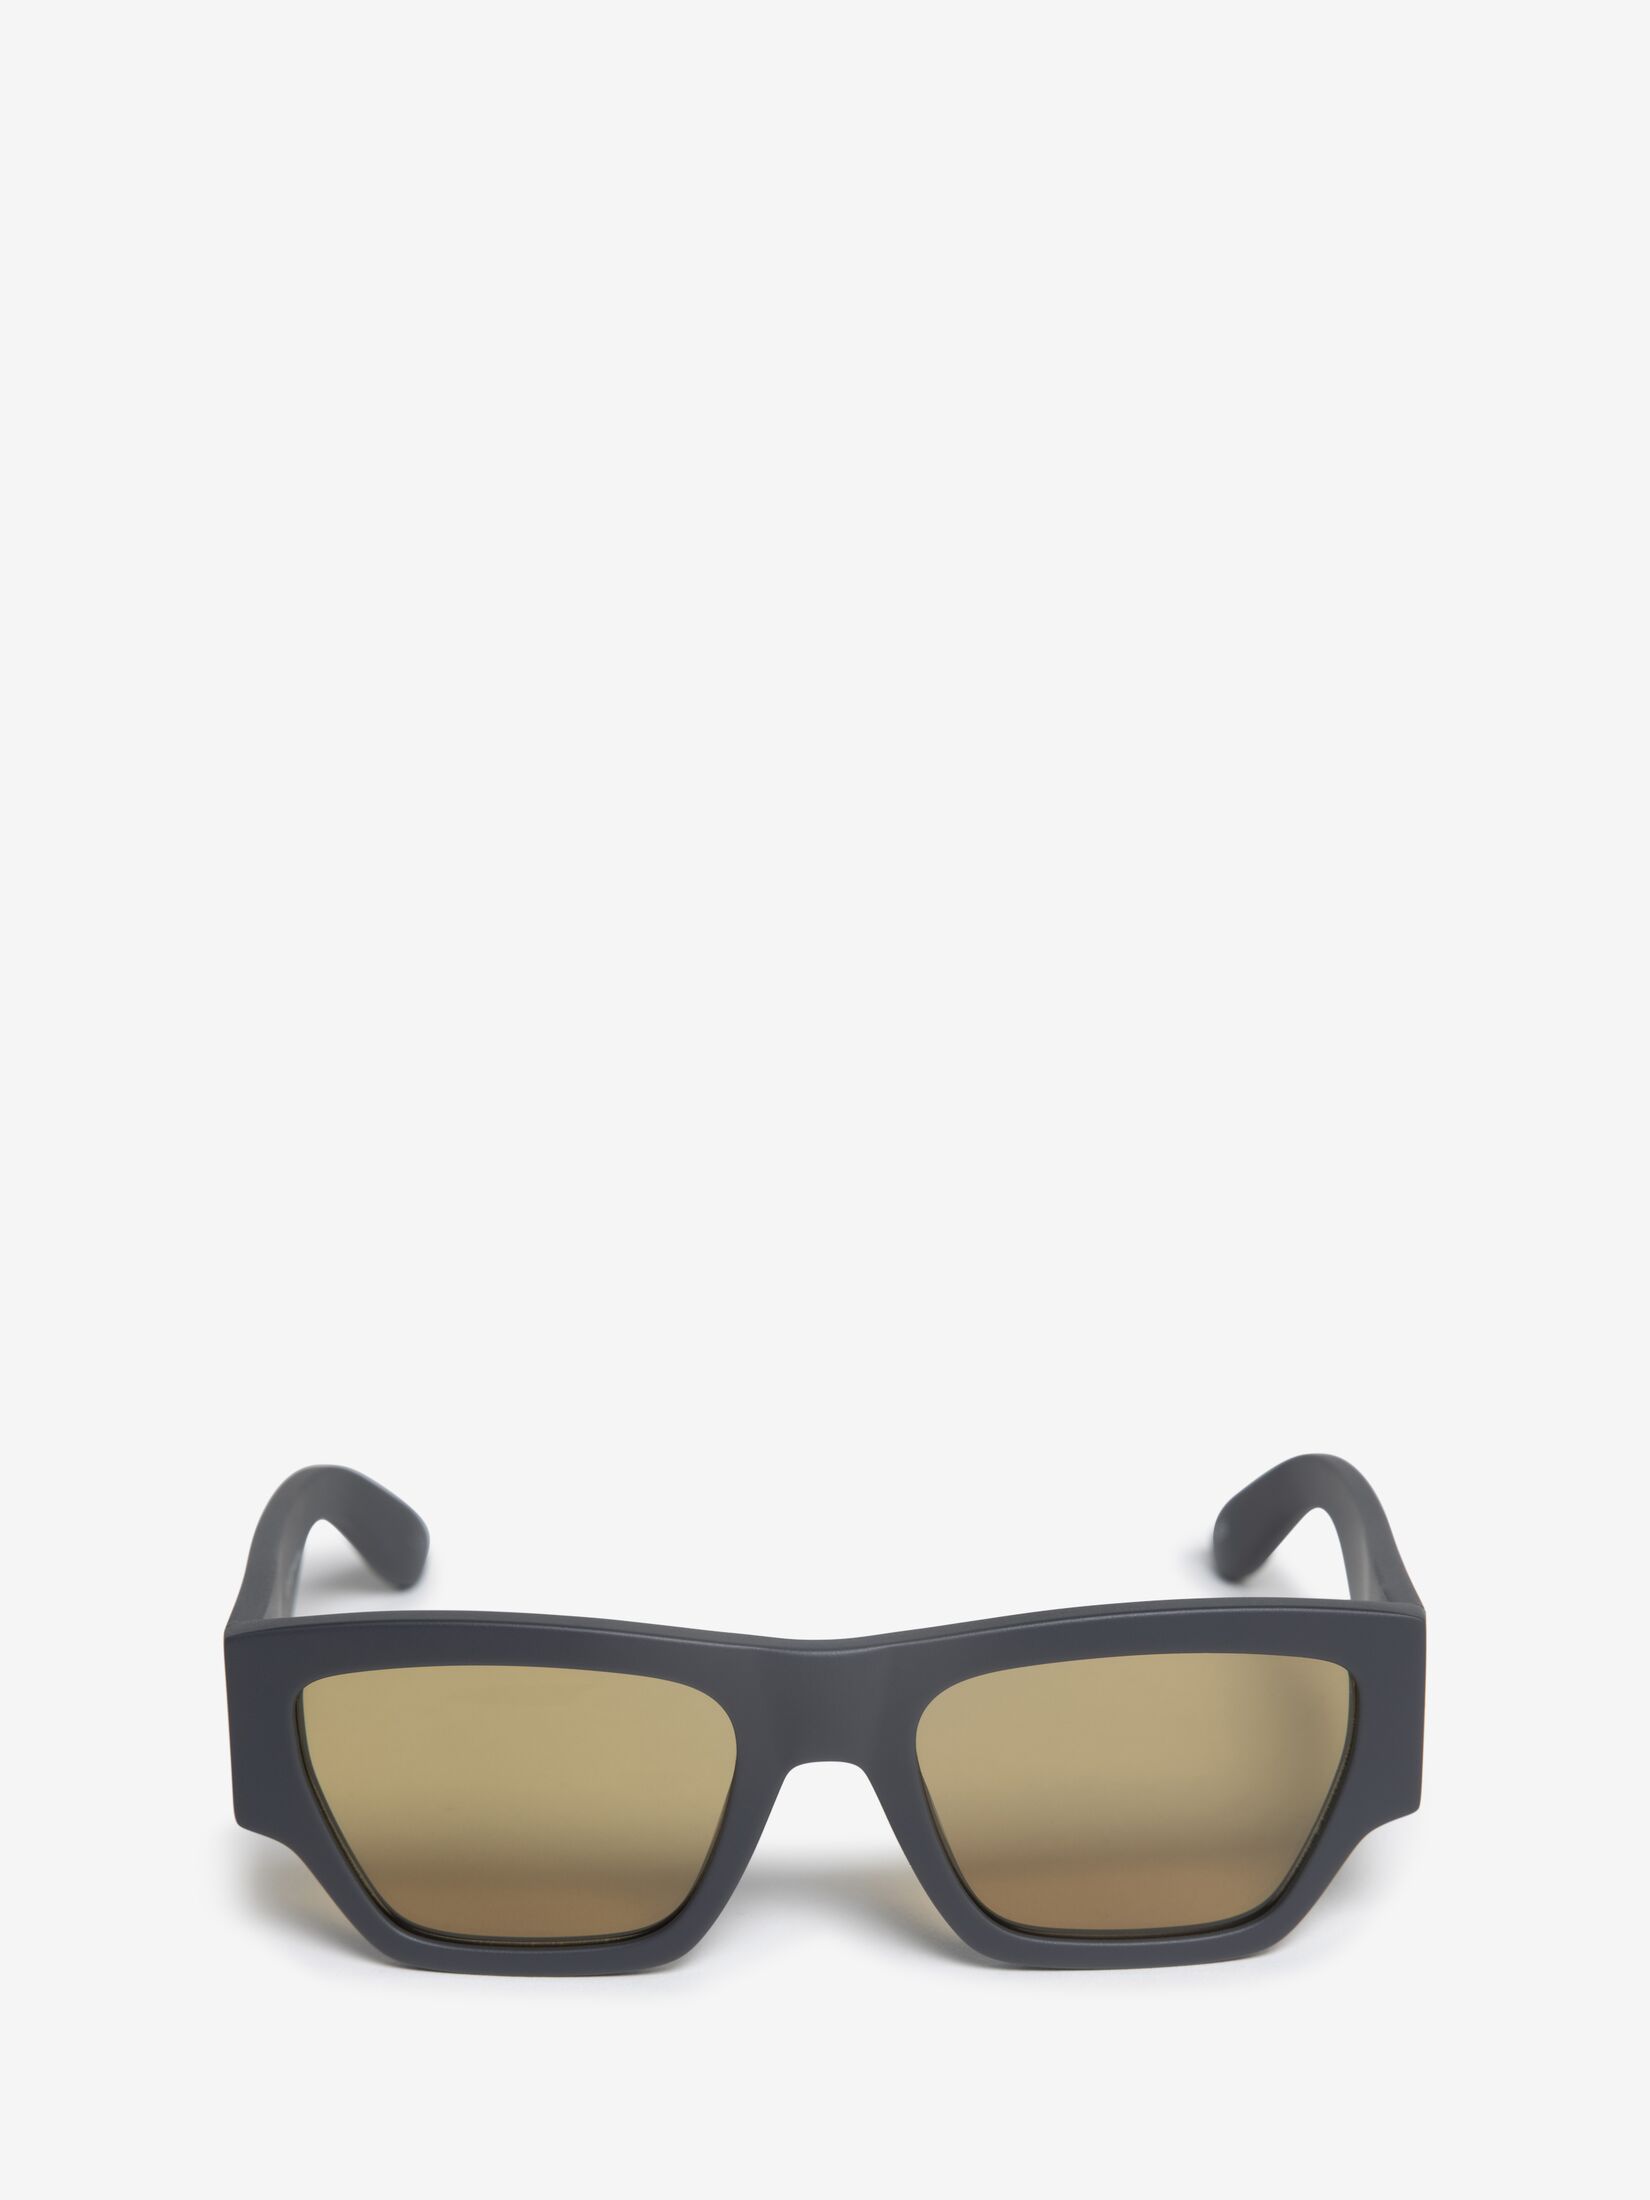 McQueen Angled Rectangular Sunglasses